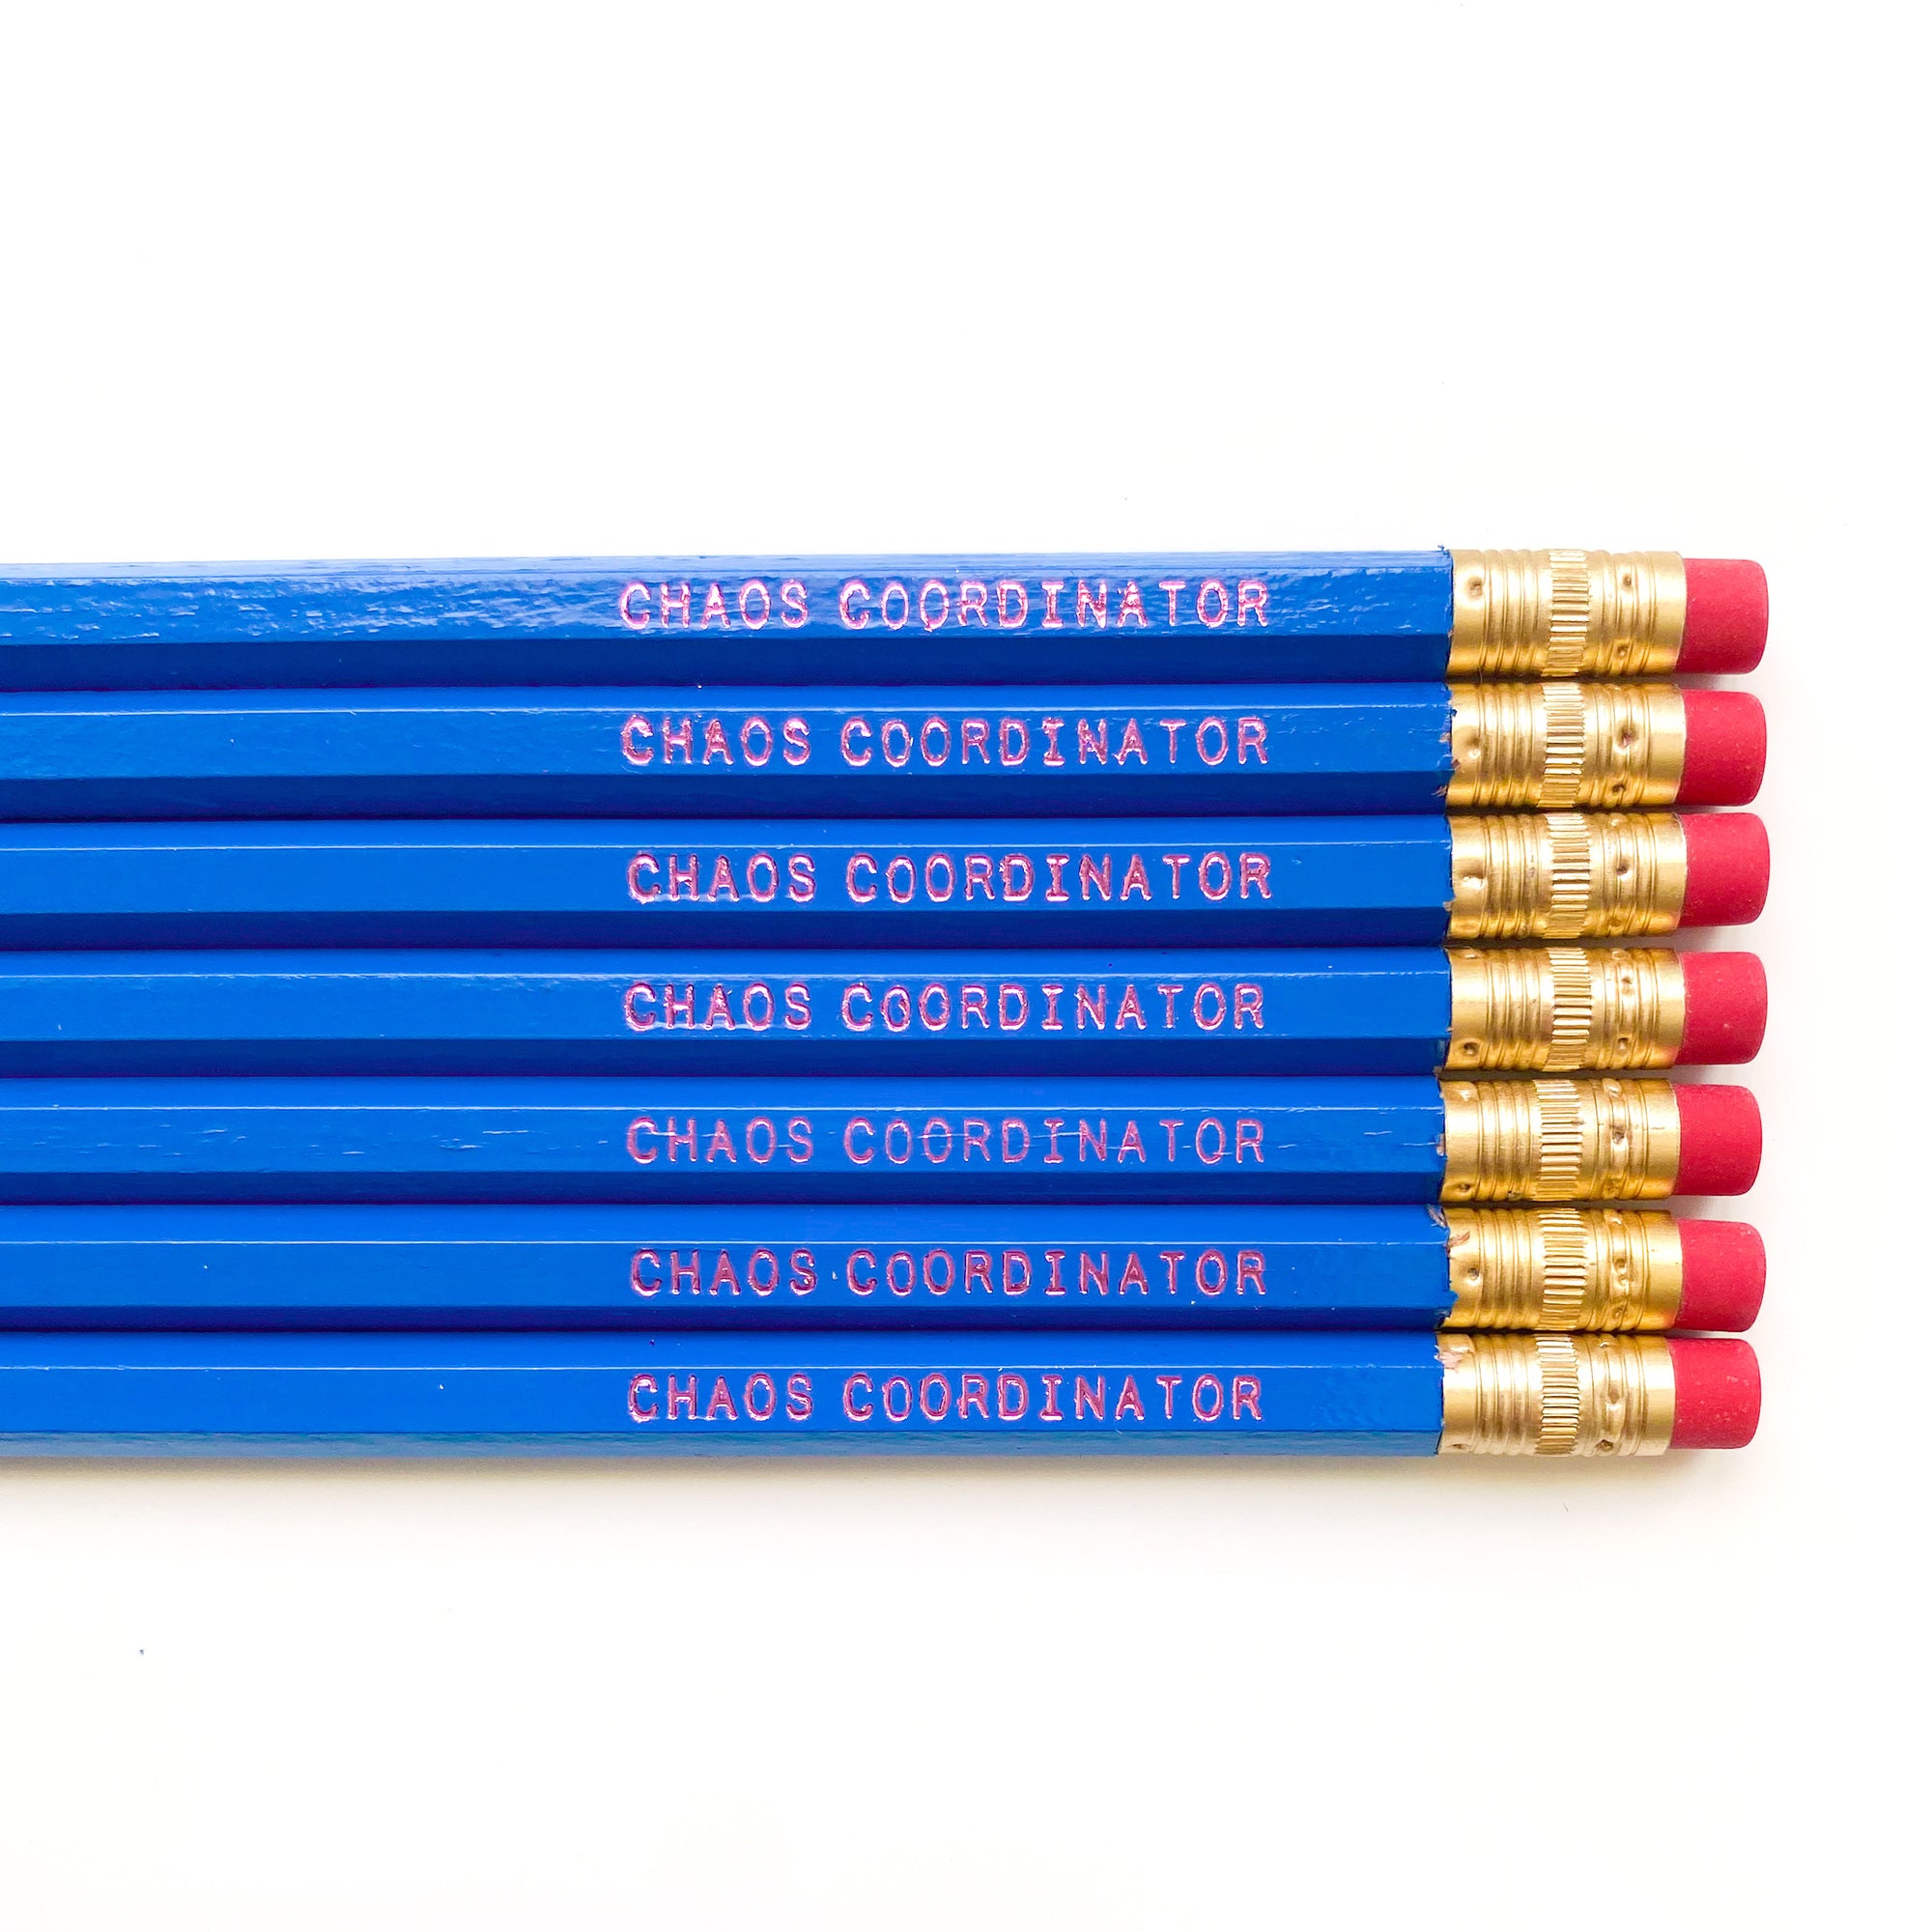 Chaos Coordinator Pencil Set